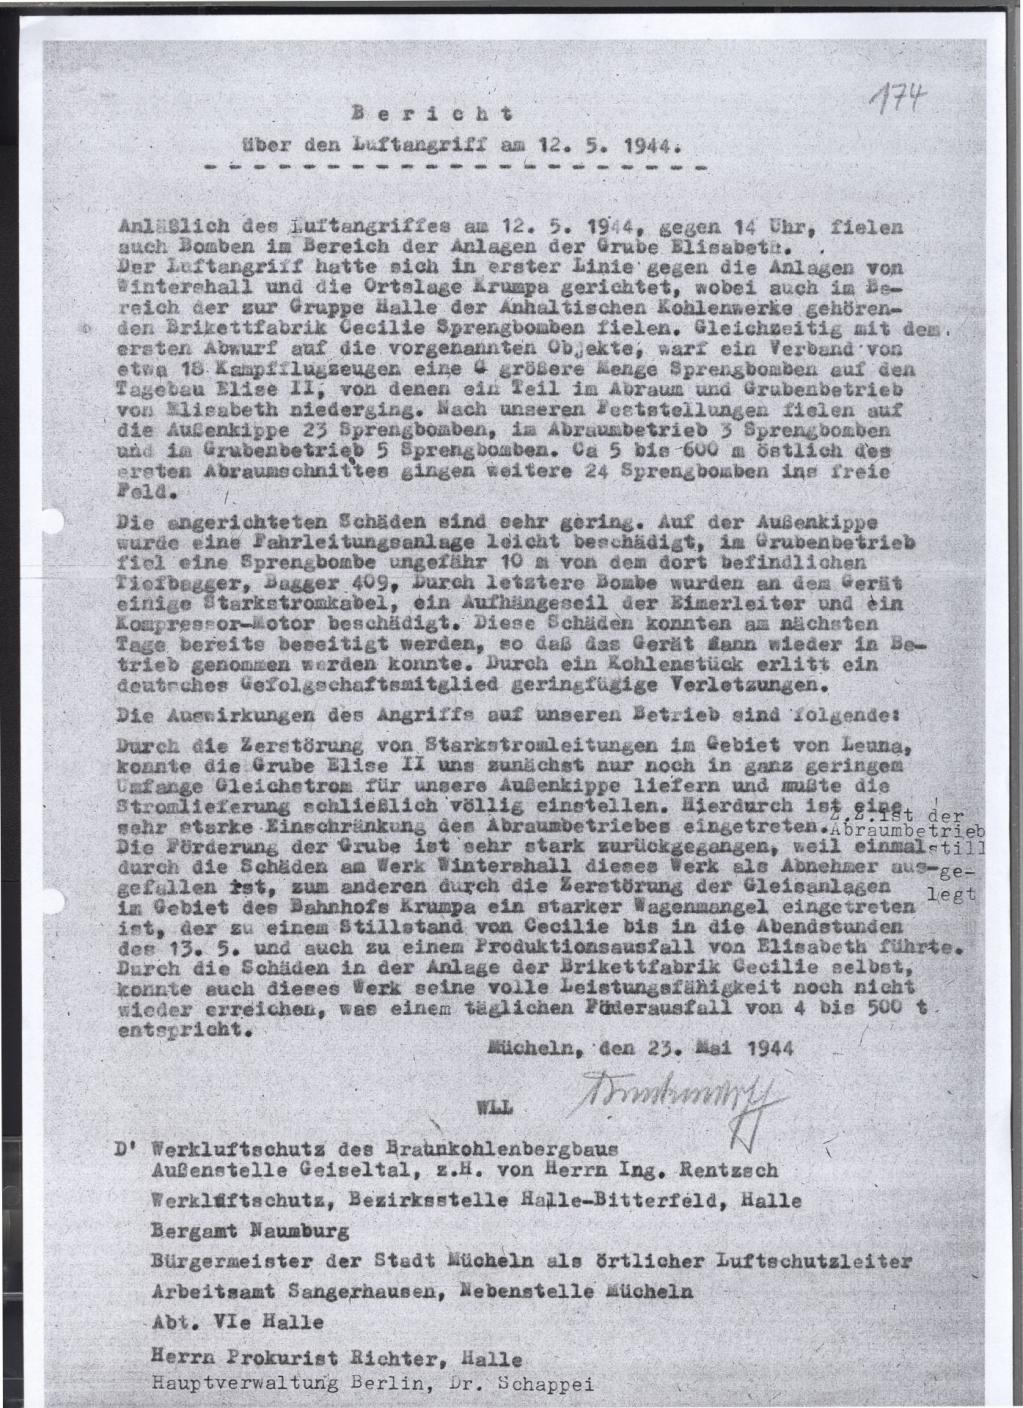 Bericht A.K.W. Grube Elisabeth 23.5.1944 